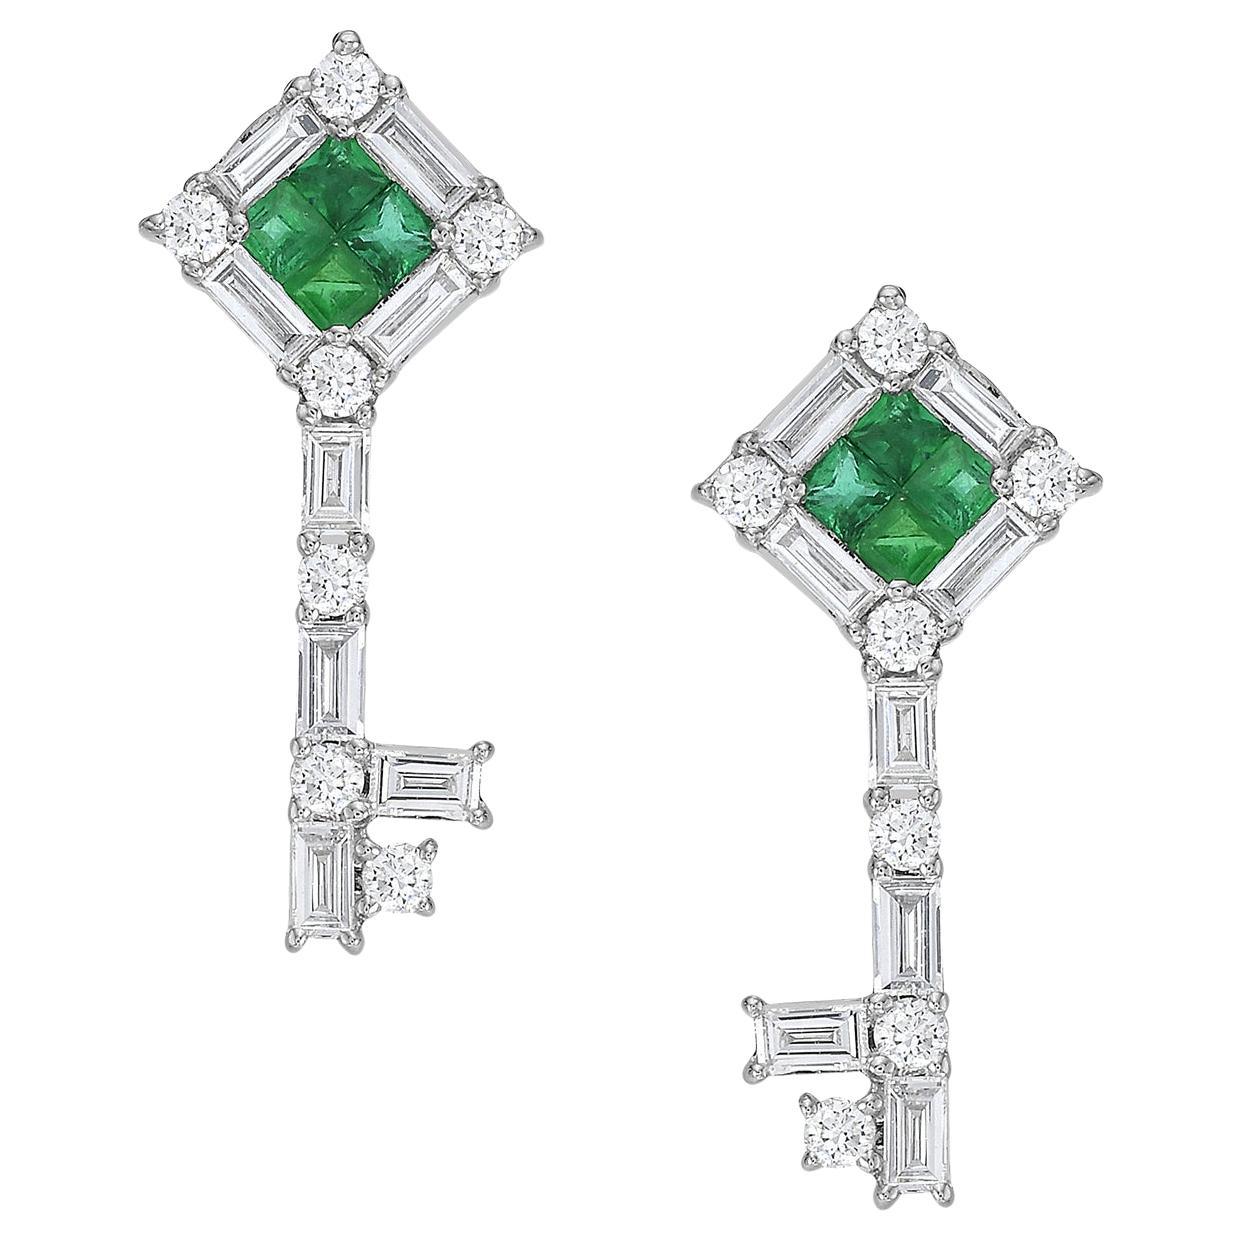 Emerald & Diamond Key Shaped Earrings Made In 18k White Gold For Sale